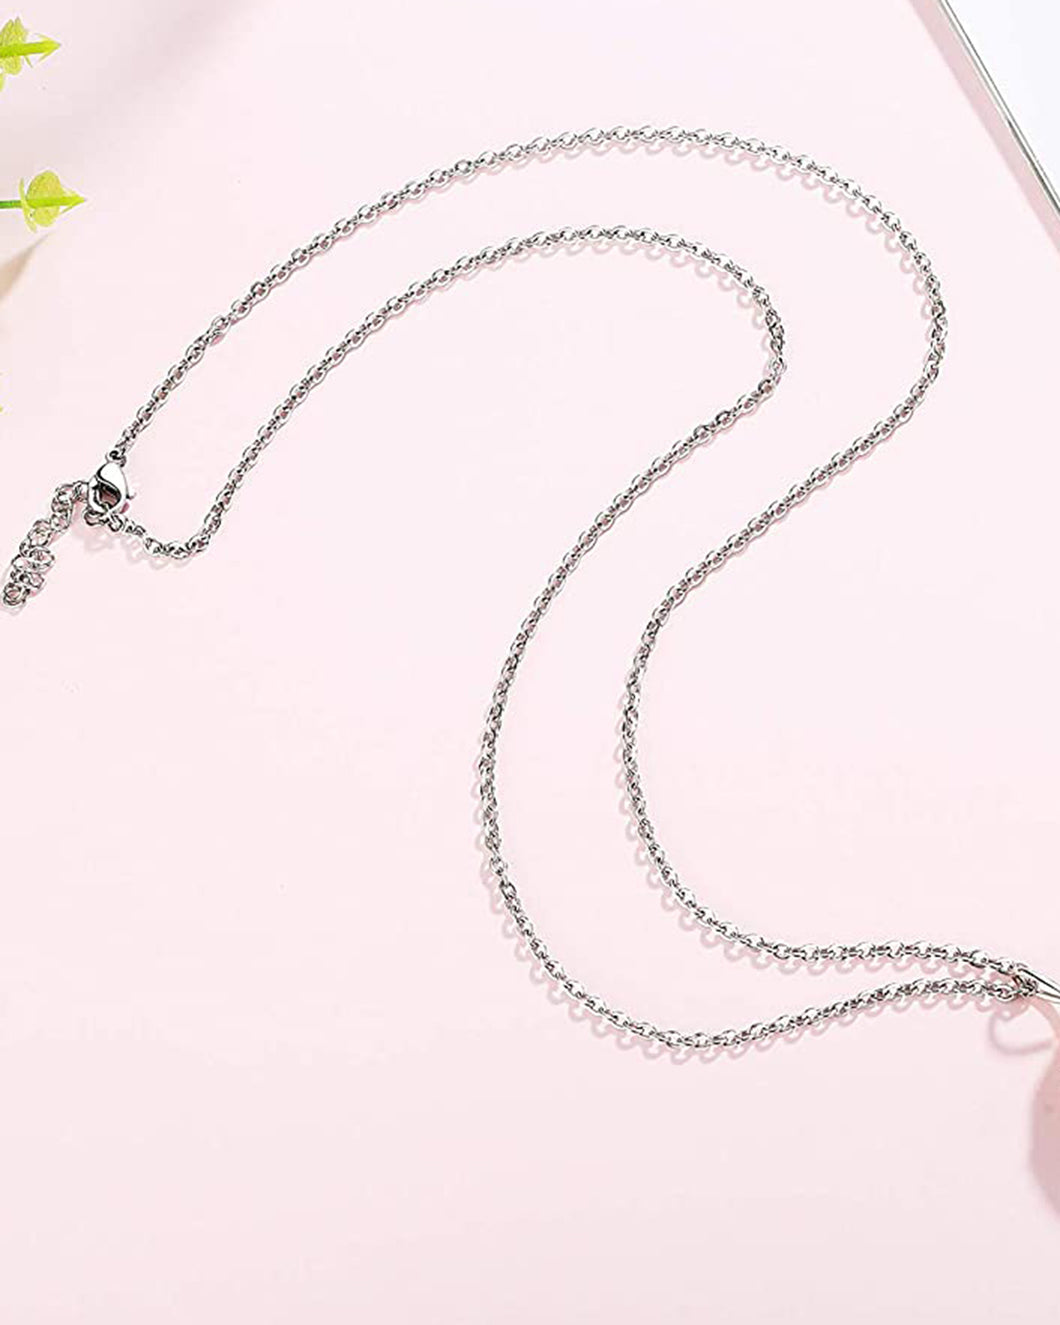 Premium Chain Necklace. 18